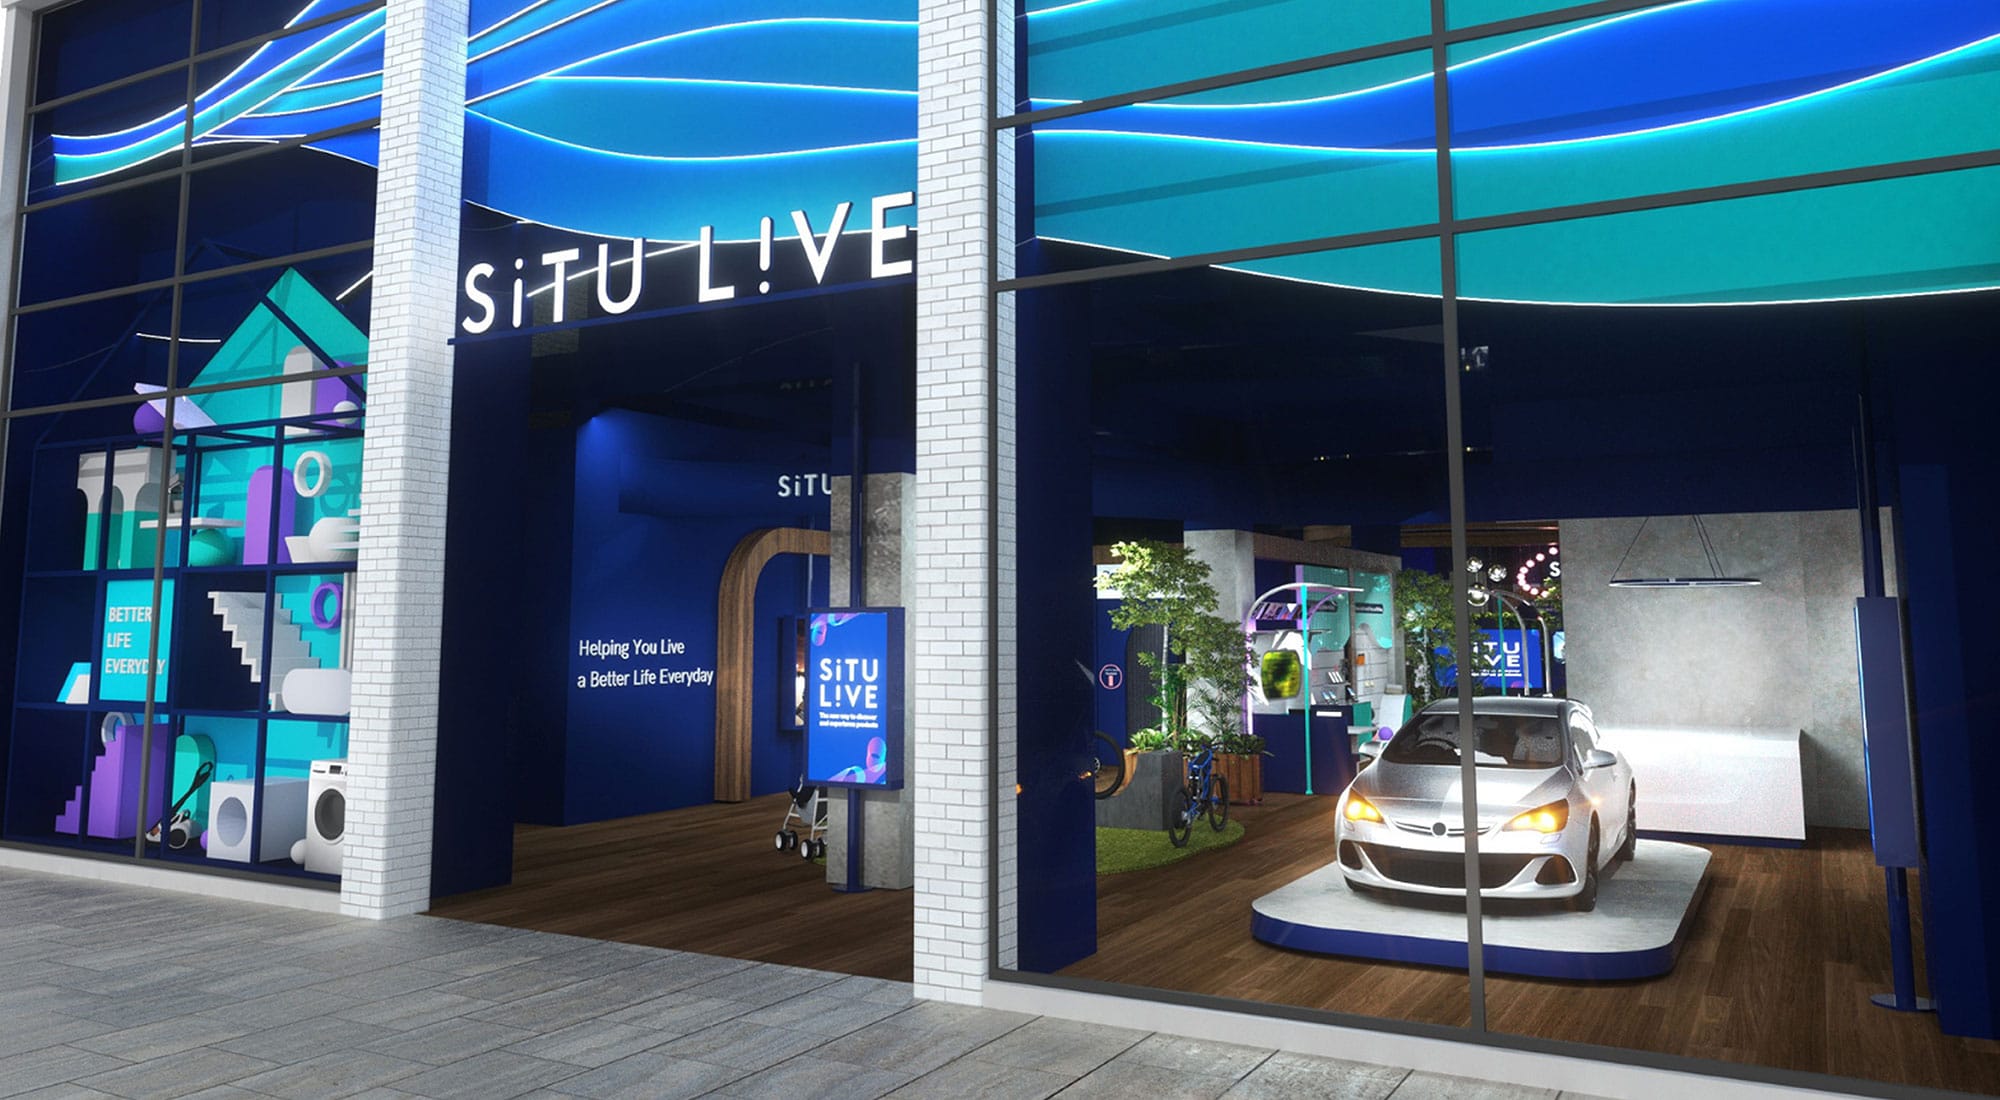 ukactive joins forces with experiential retail venue Situ Live